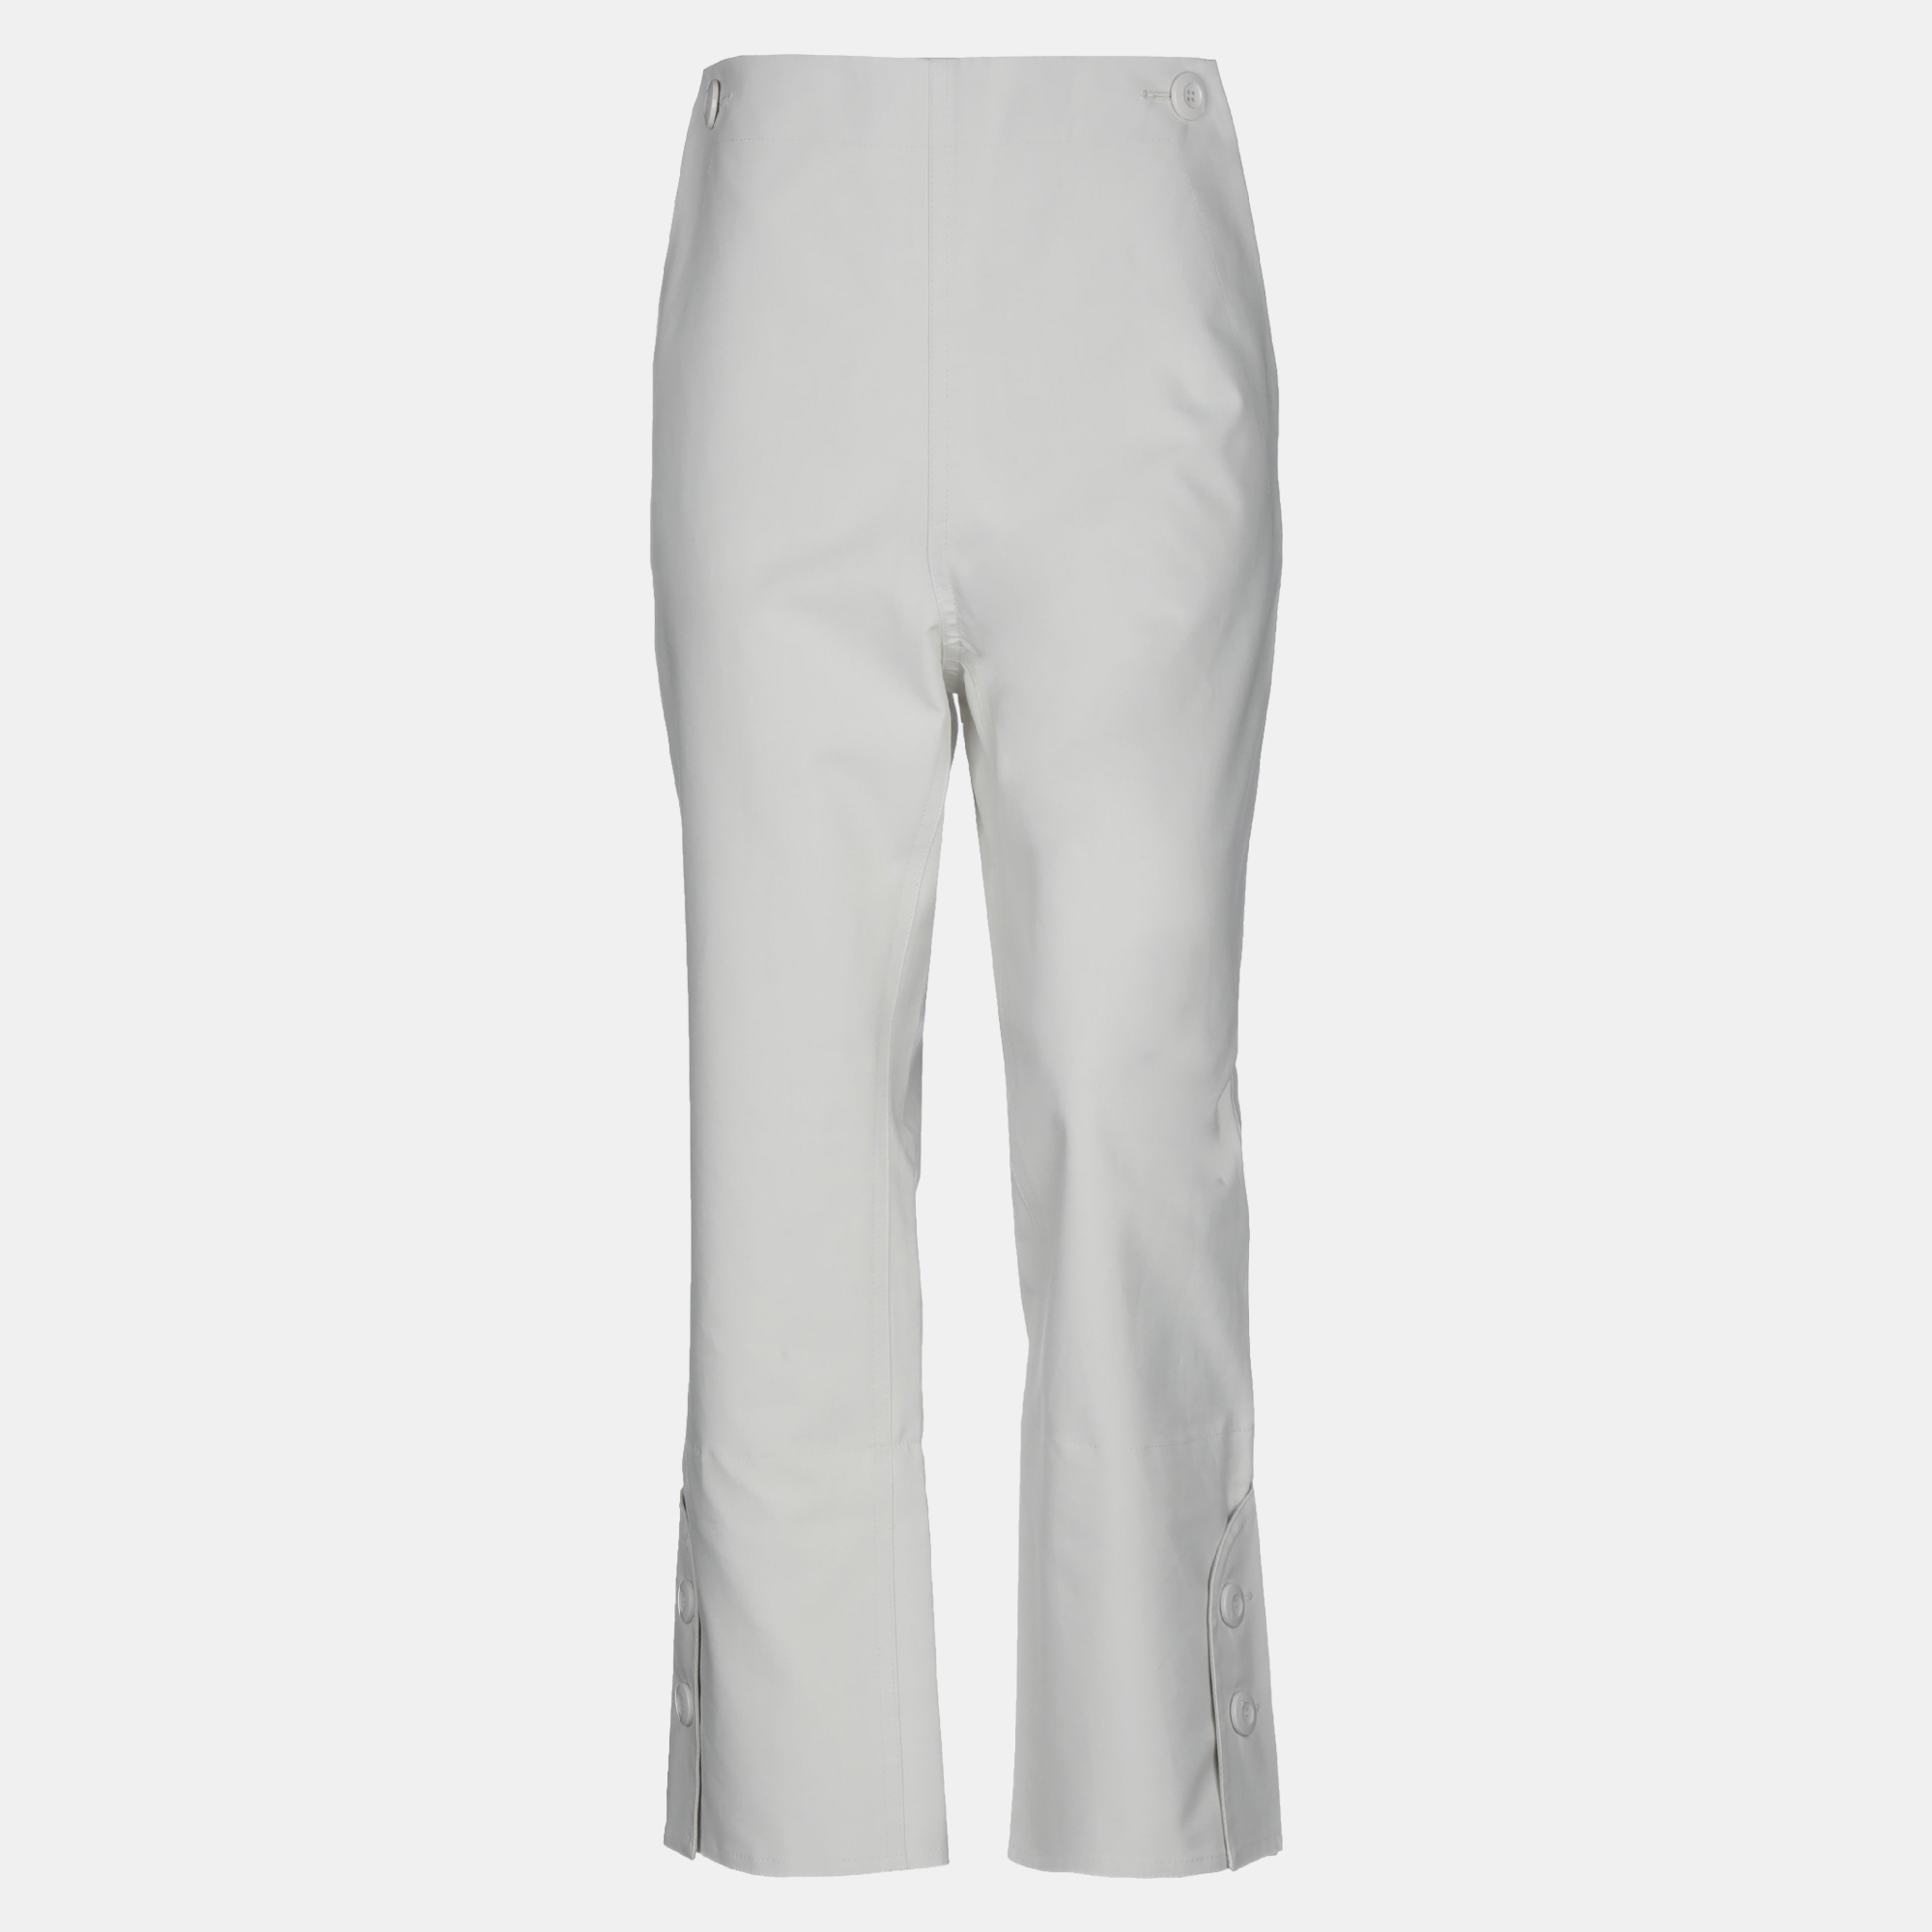 Marni cotton pants 46